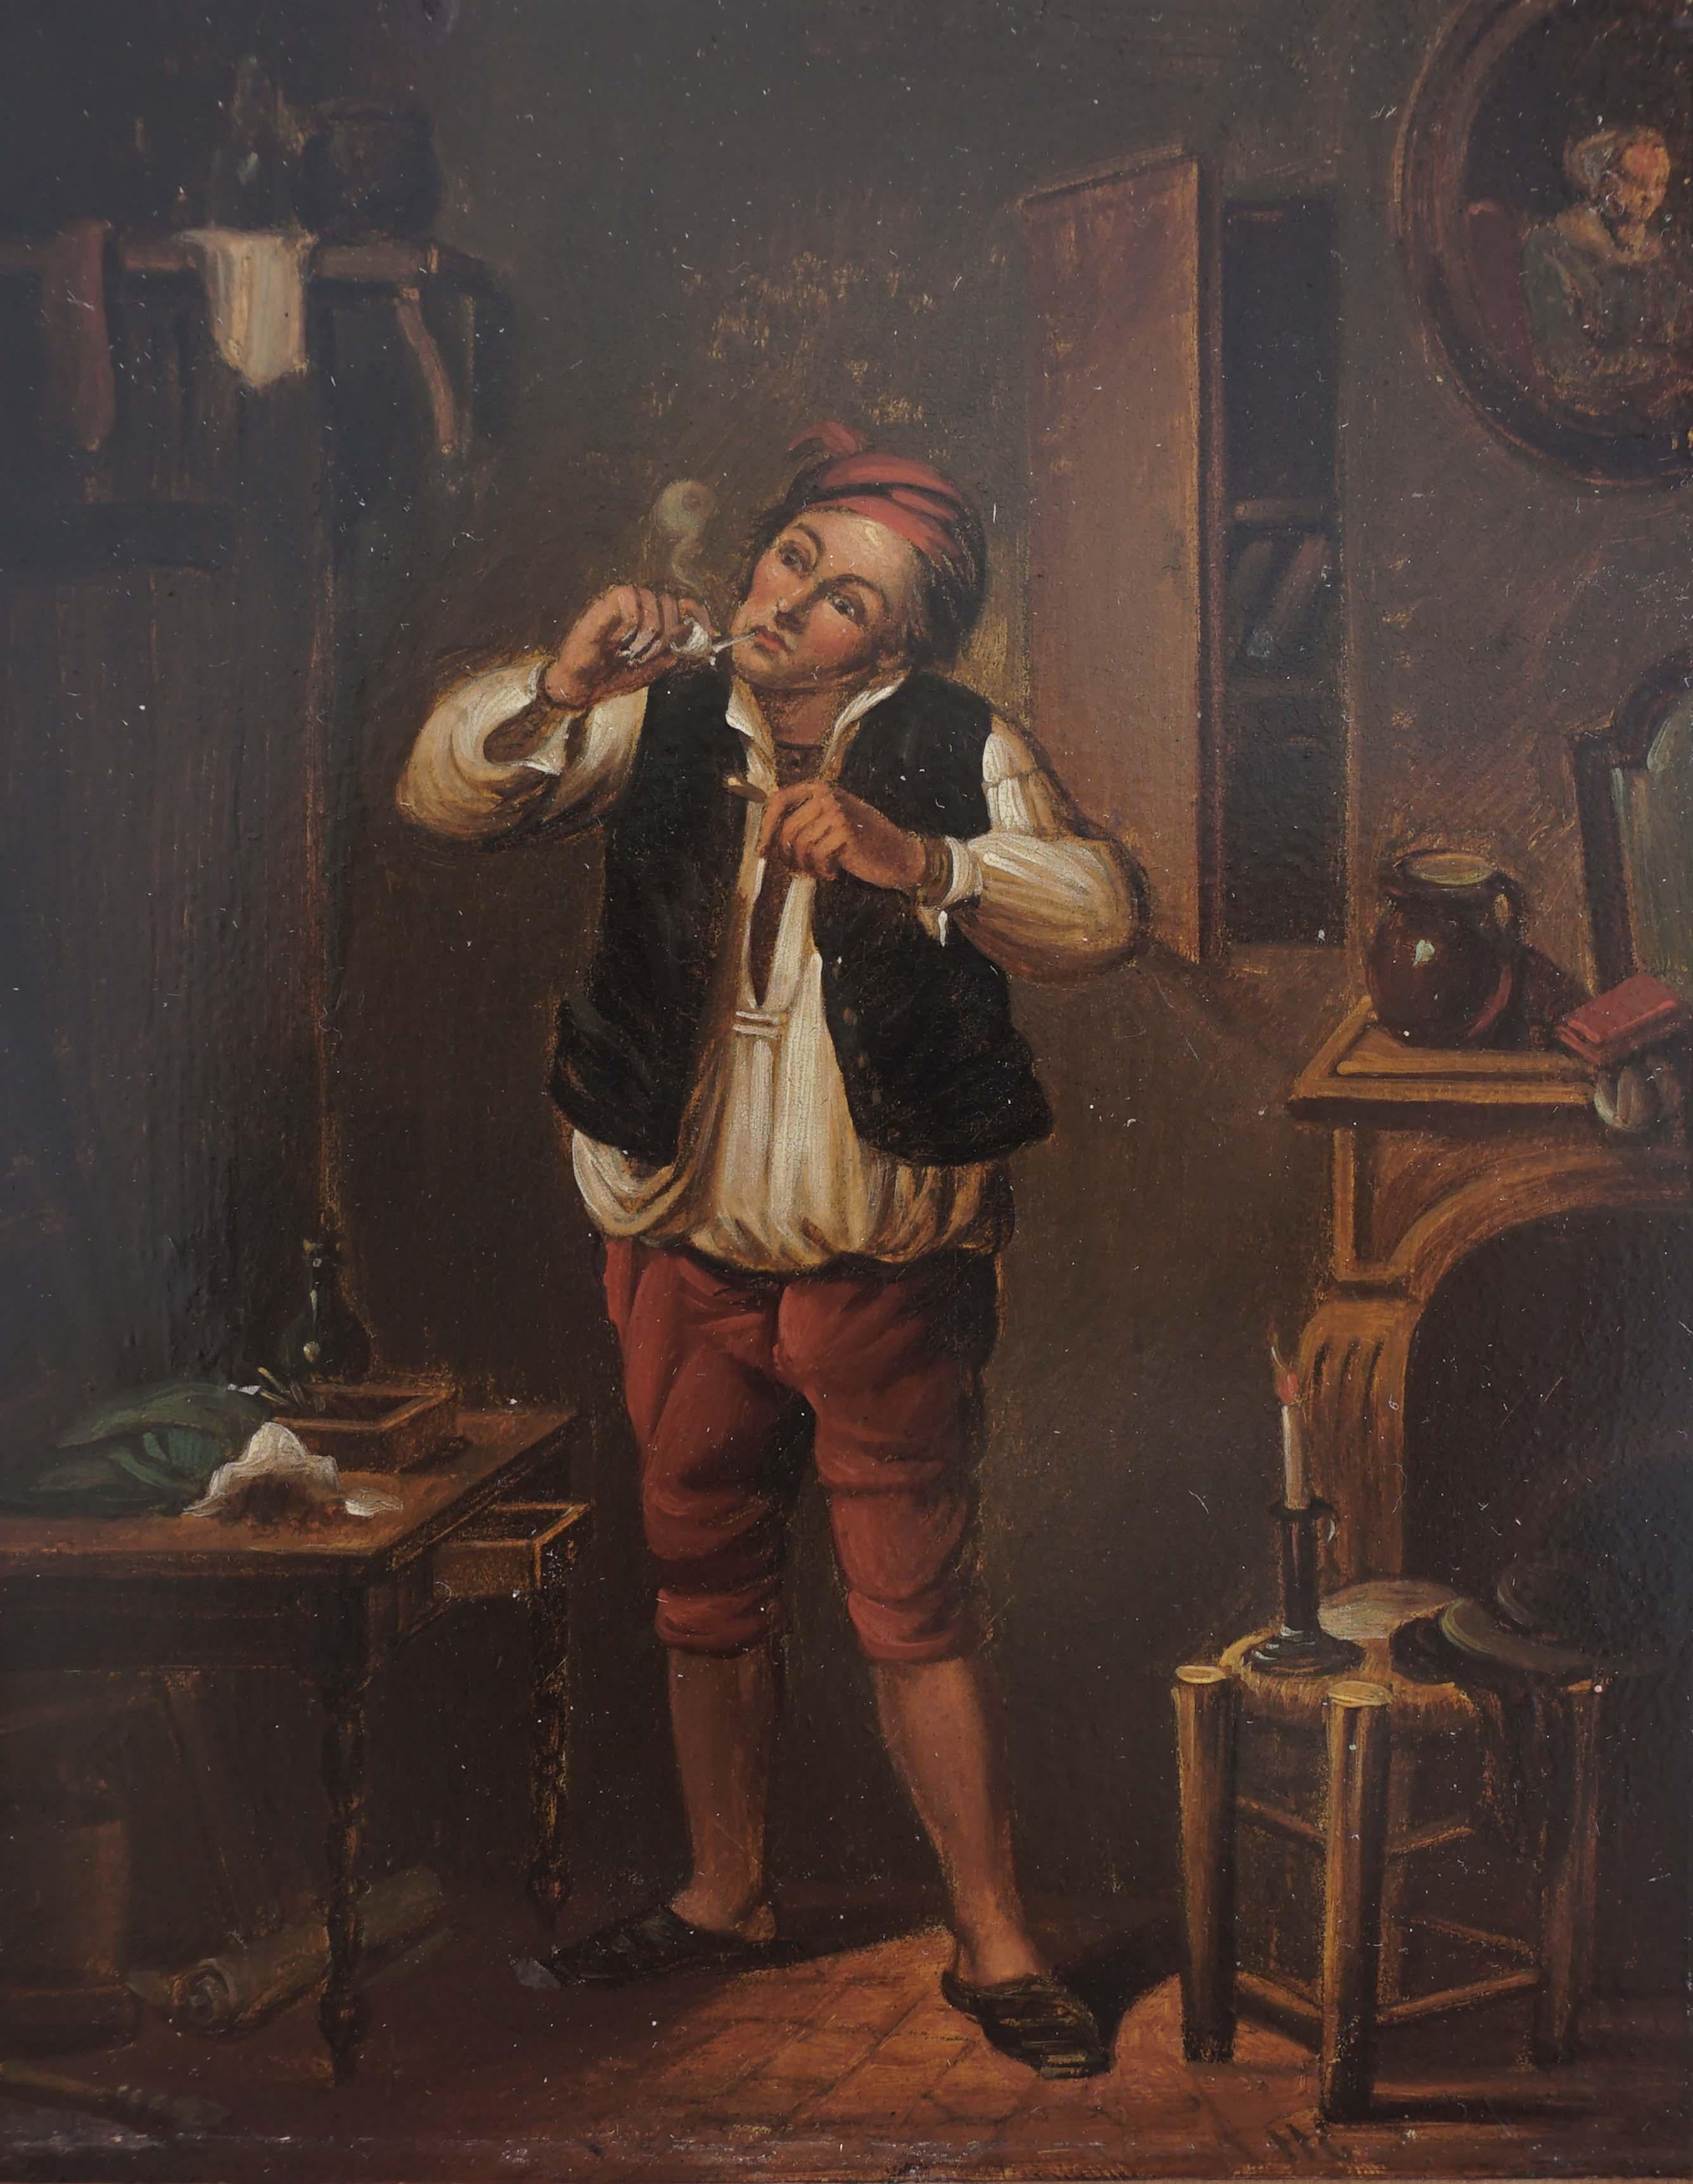 Flemish School, 17th Century Figurative Painting - 17th Century Genre Painting -- The Pipe Smoker